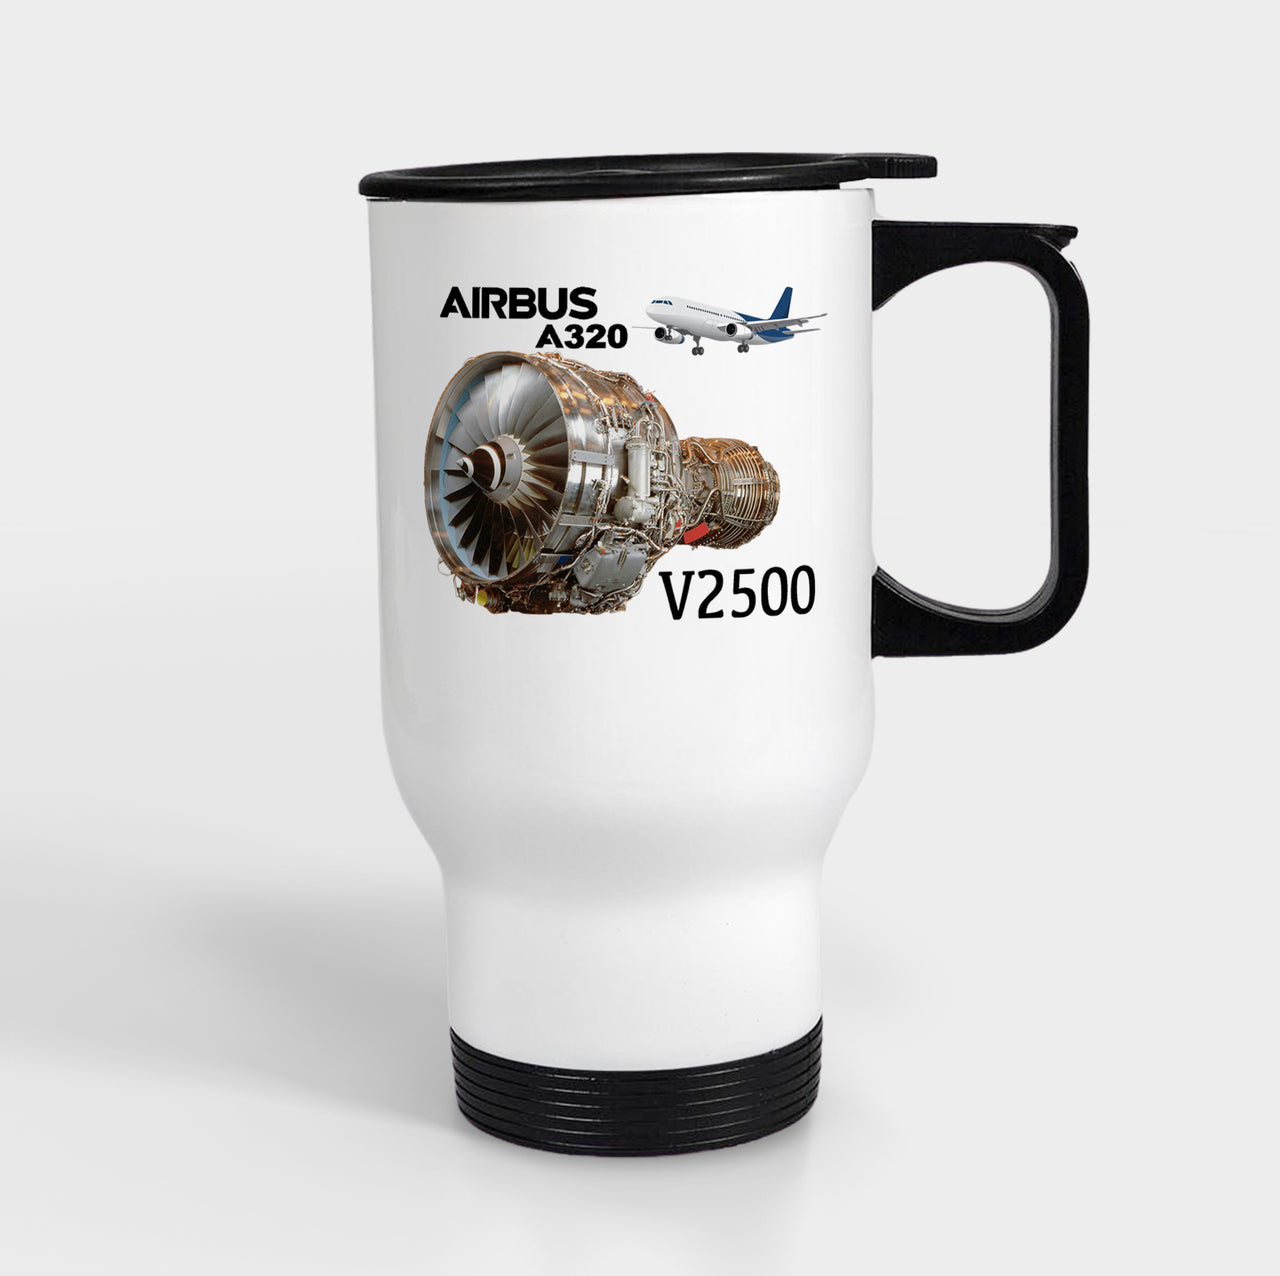 Airbus A320 & V2500 Engine Designed Travel Mugs (With Holder)